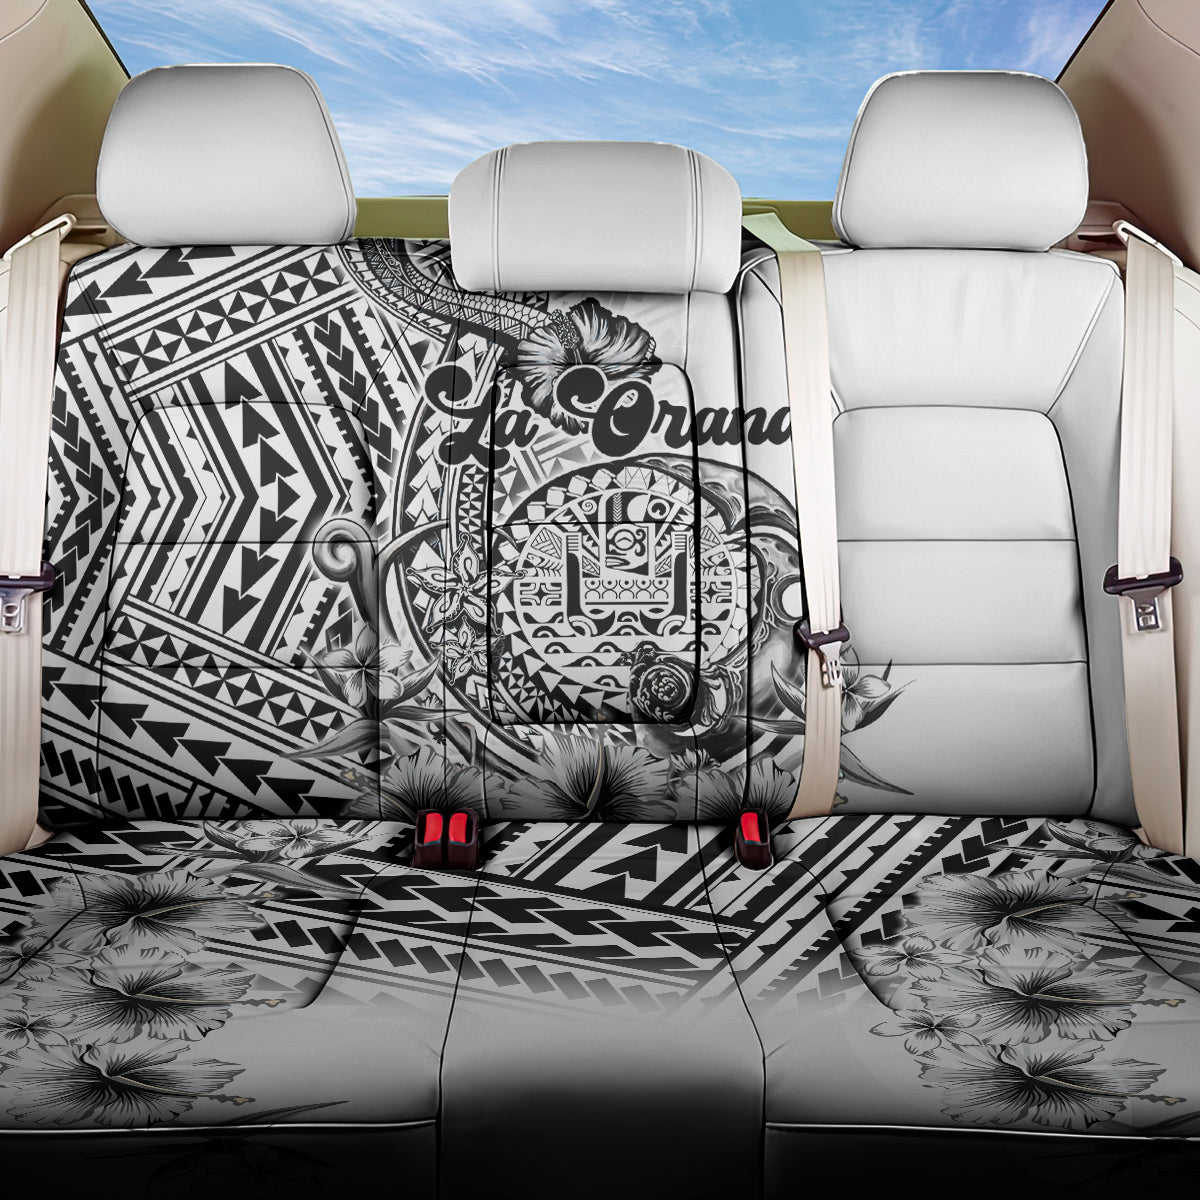 La Orana Tahiti Personalised Back Car Seat Cover French Polynesia Hook Tattoo Special White Color LT9 One Size White - Polynesian Pride